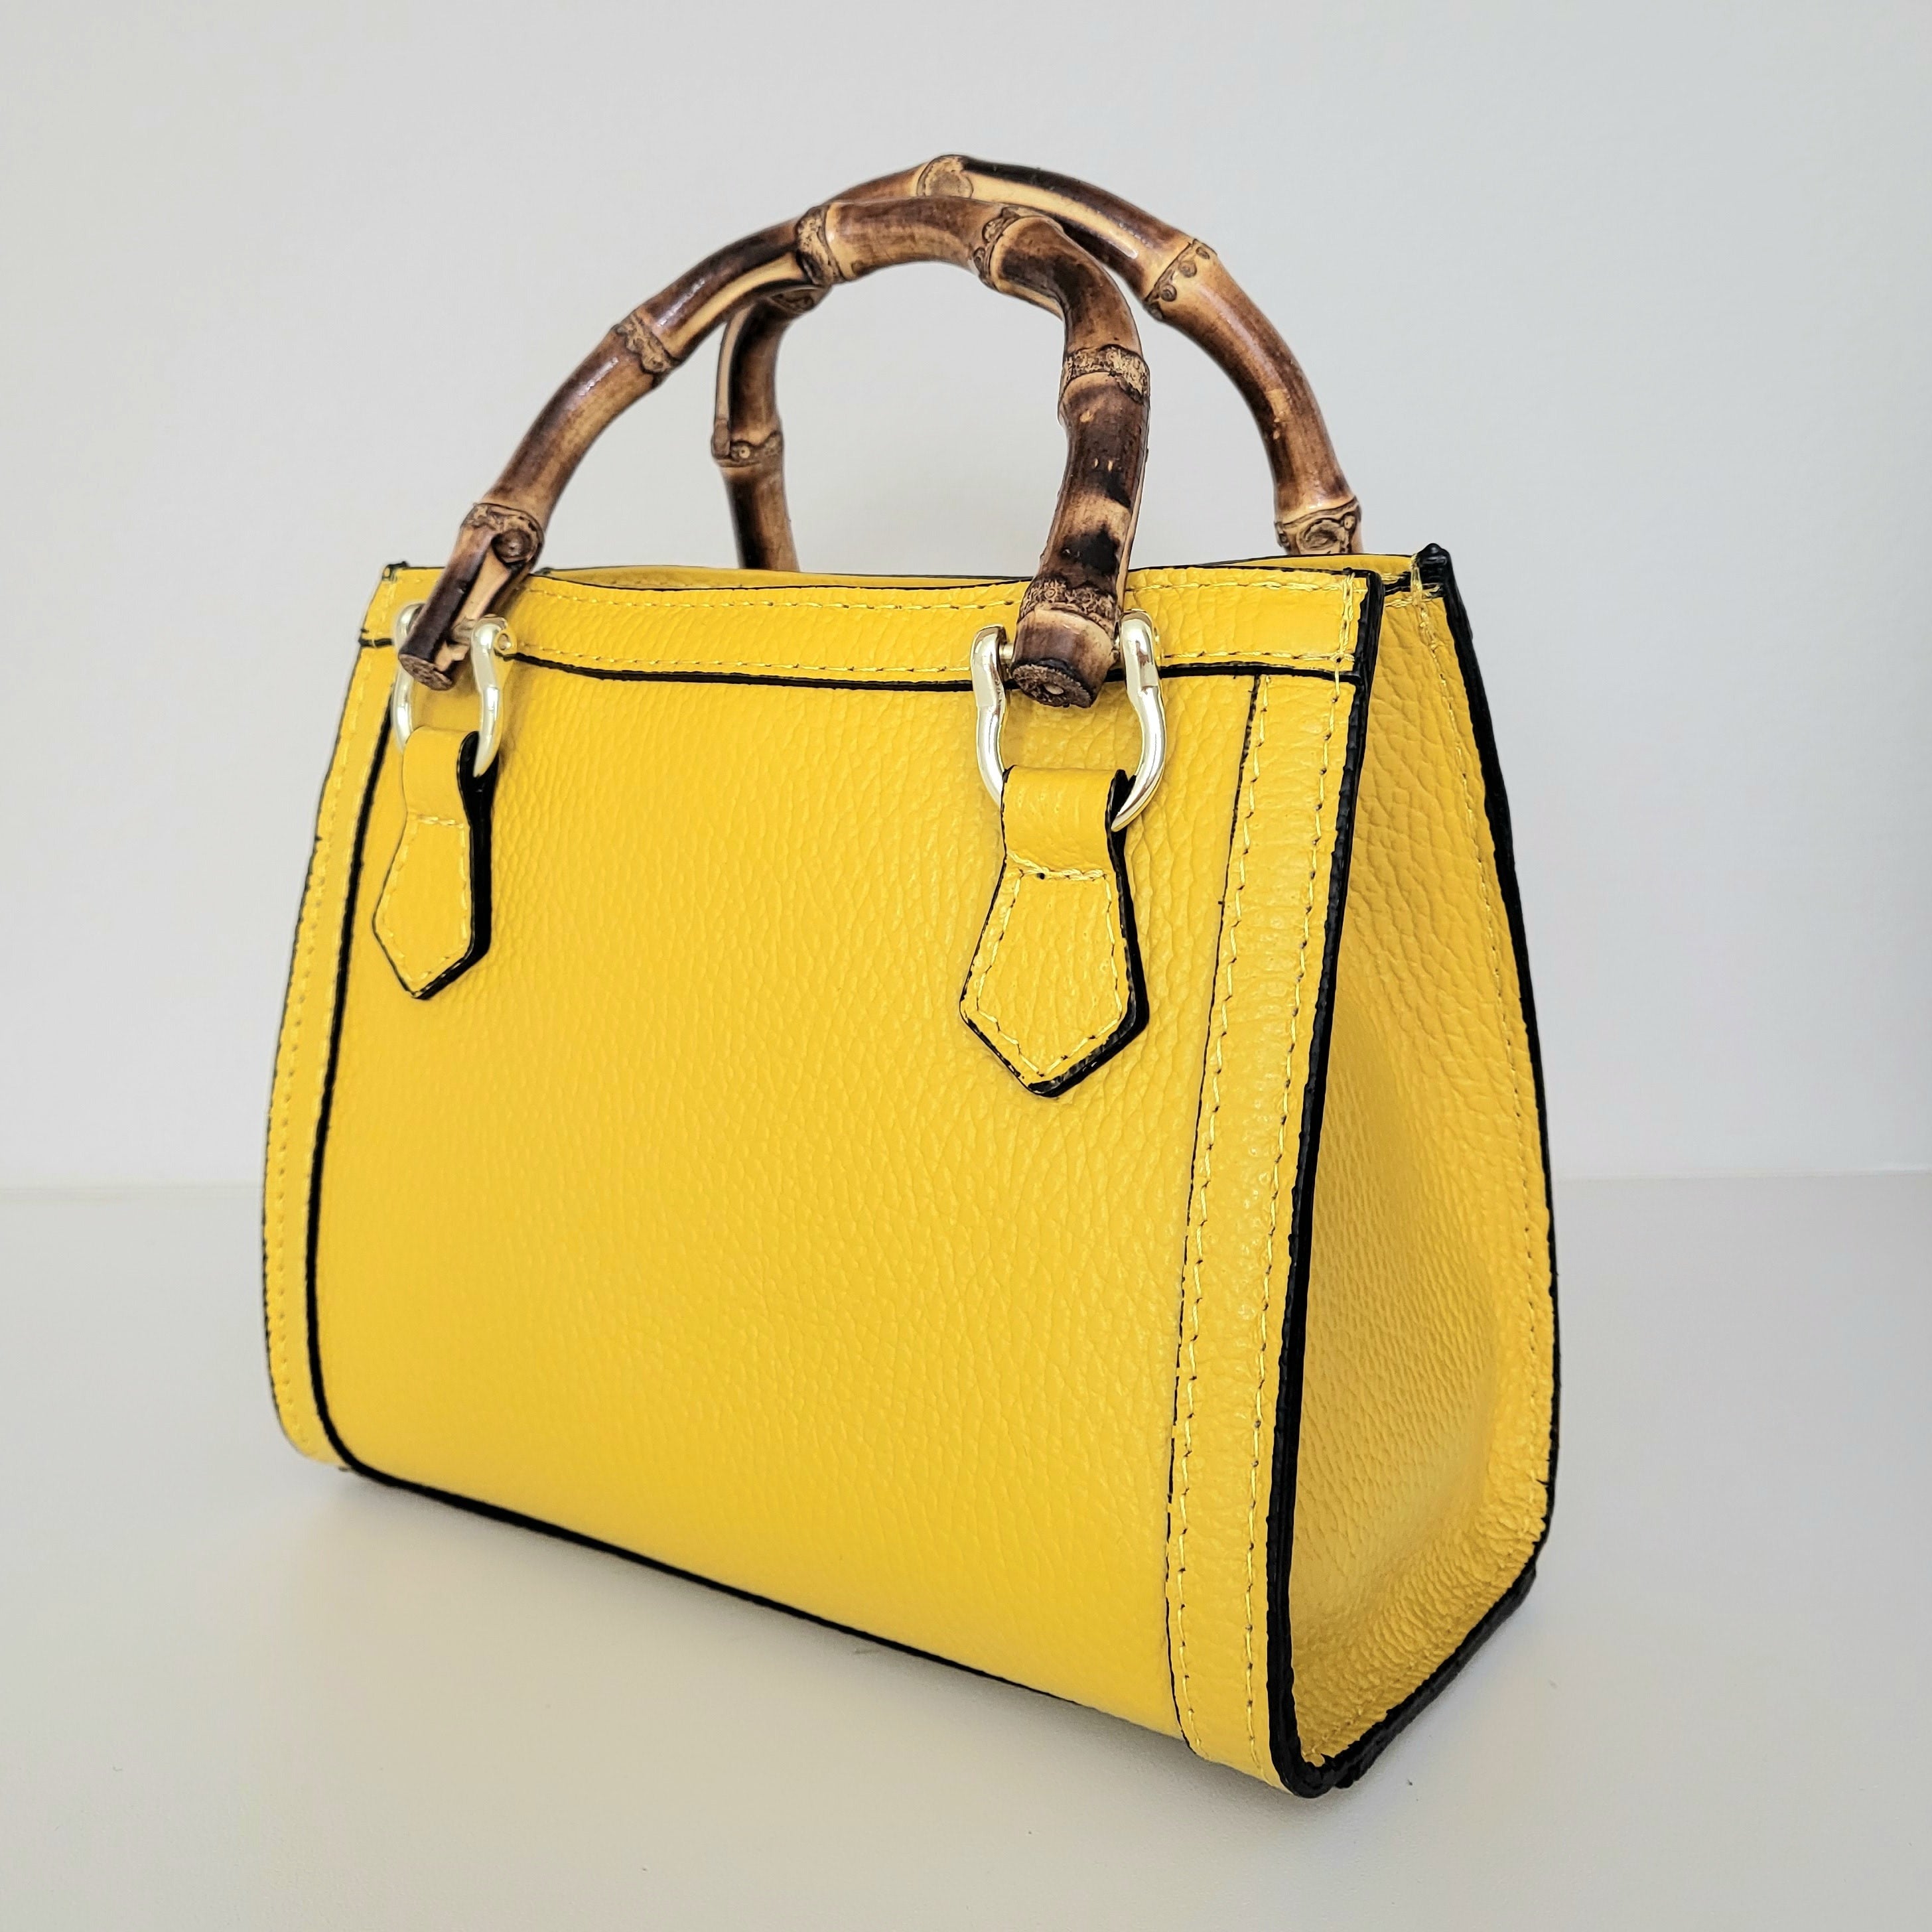 Italian Leather Handbags, Bamboo Handle Bag, Genuine Leather Handbags for Women, Handmade Leather Bag, Crossbody Leather Shoulder Bag